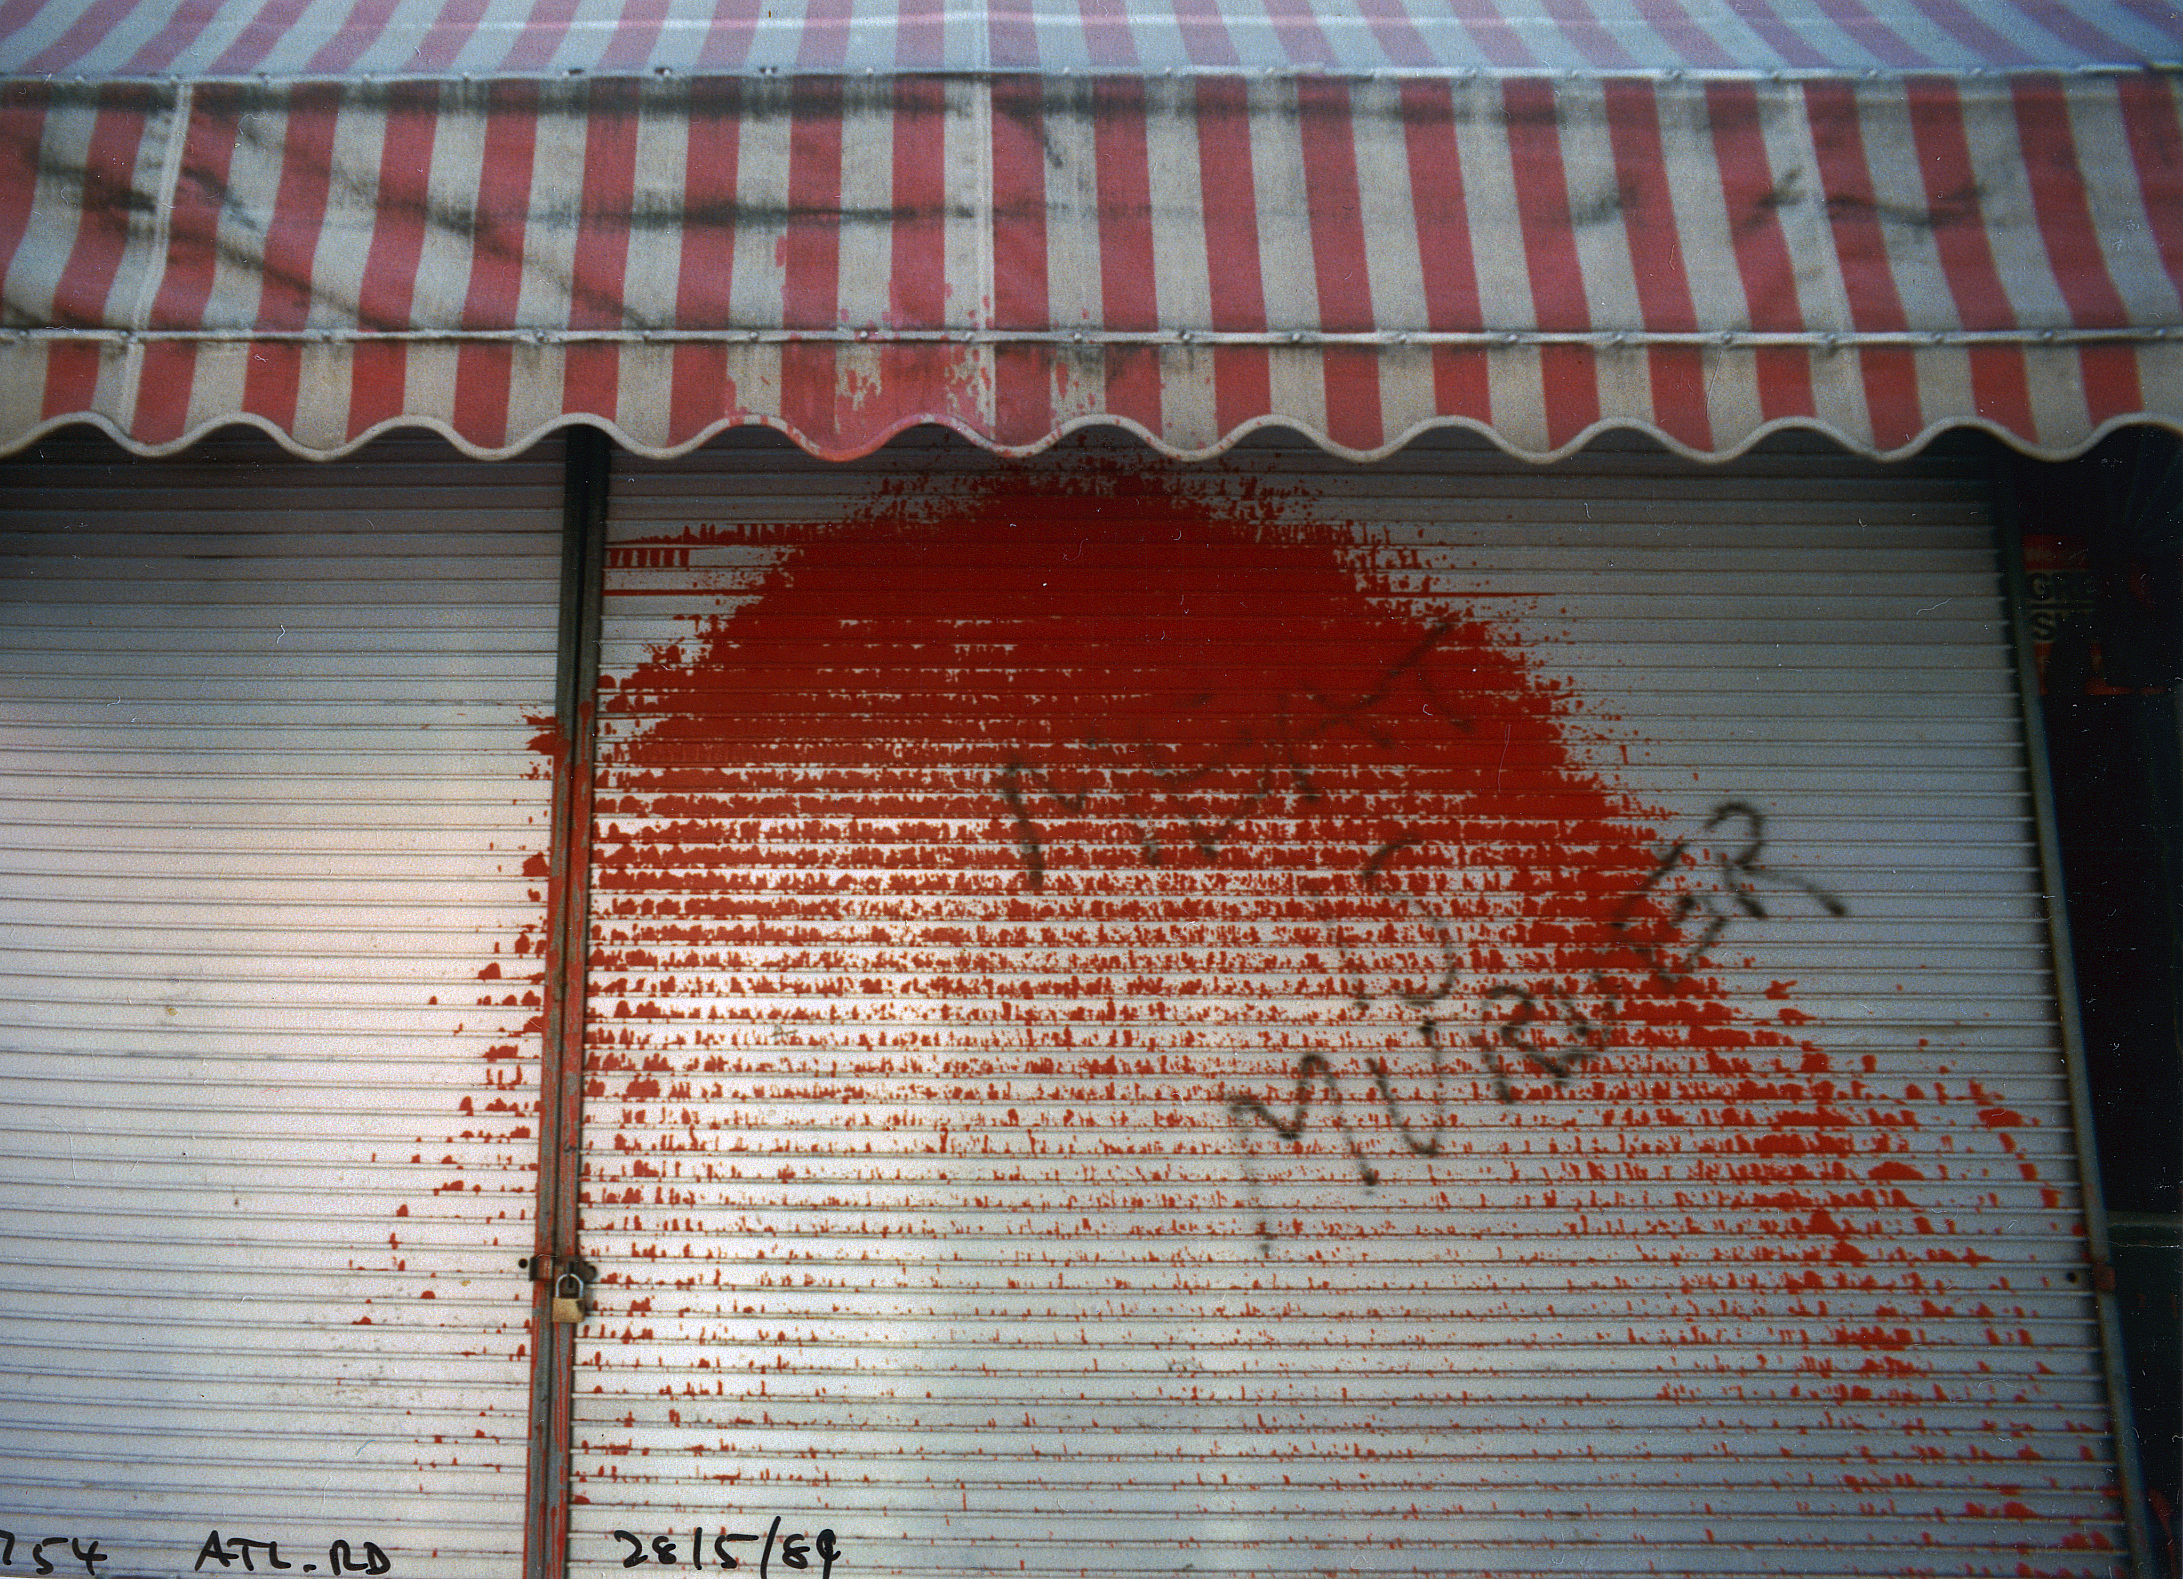 Meat is Murder, Butcher, Atlantic Rd, Brixton, 1989, Lambeth